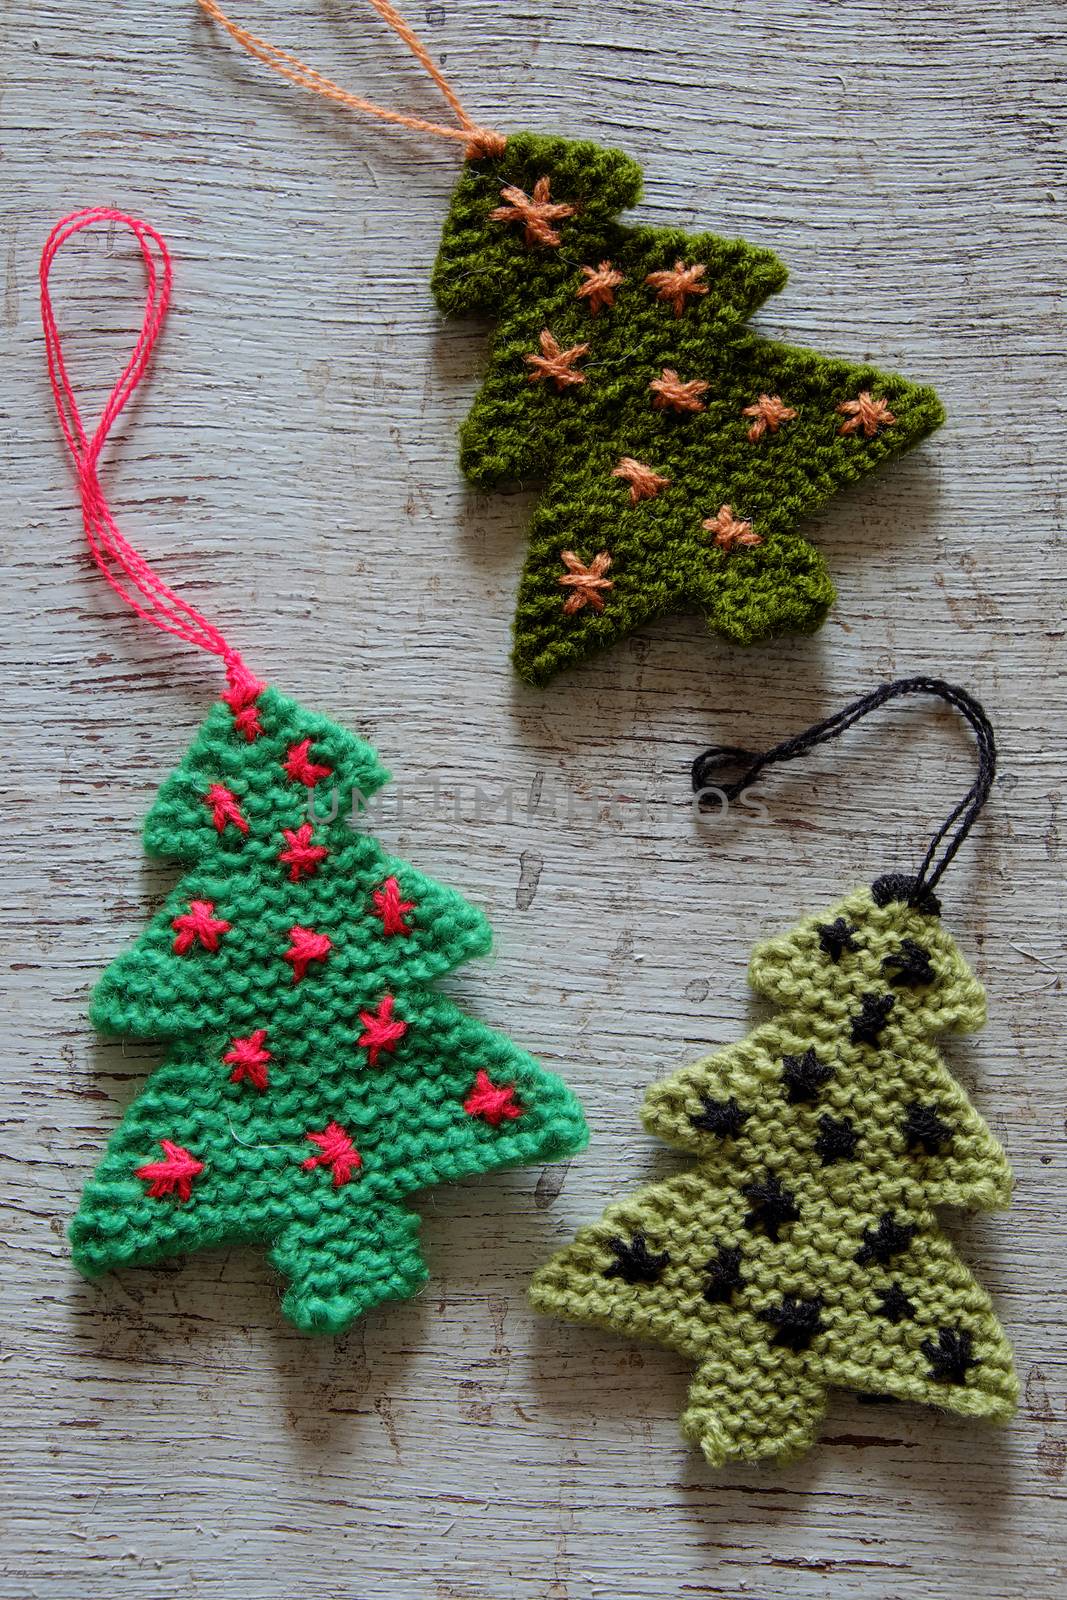 Knitted xmas tree, Christmas trees by xuanhuongho